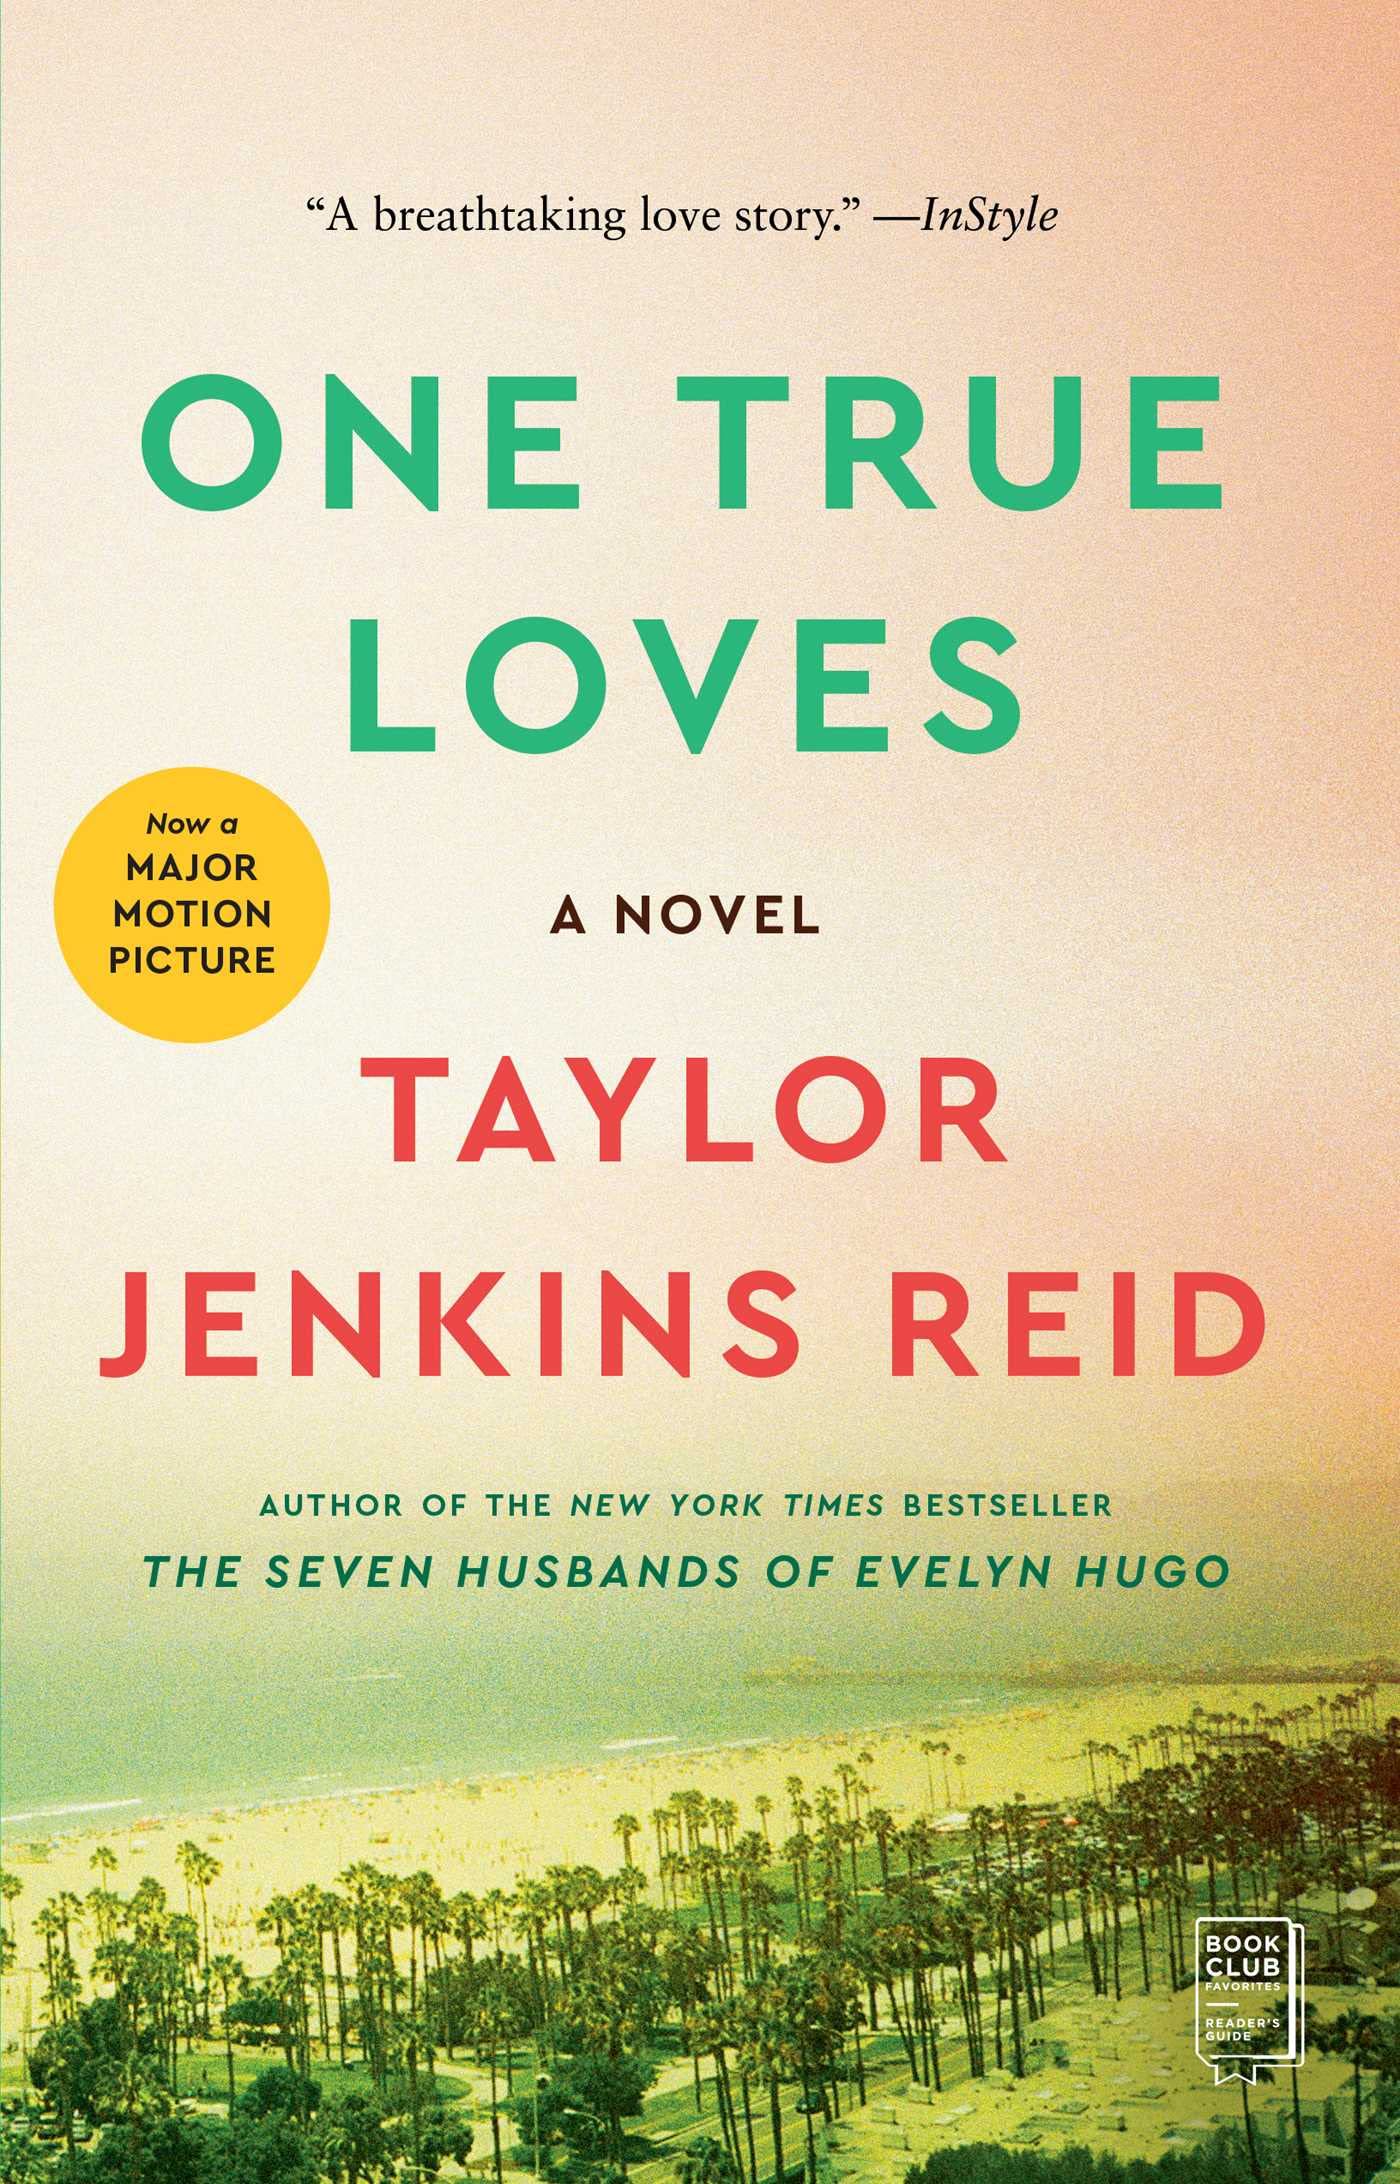 Taylor Jenkins Reid's 2016 romance drama novel, One True Loves.